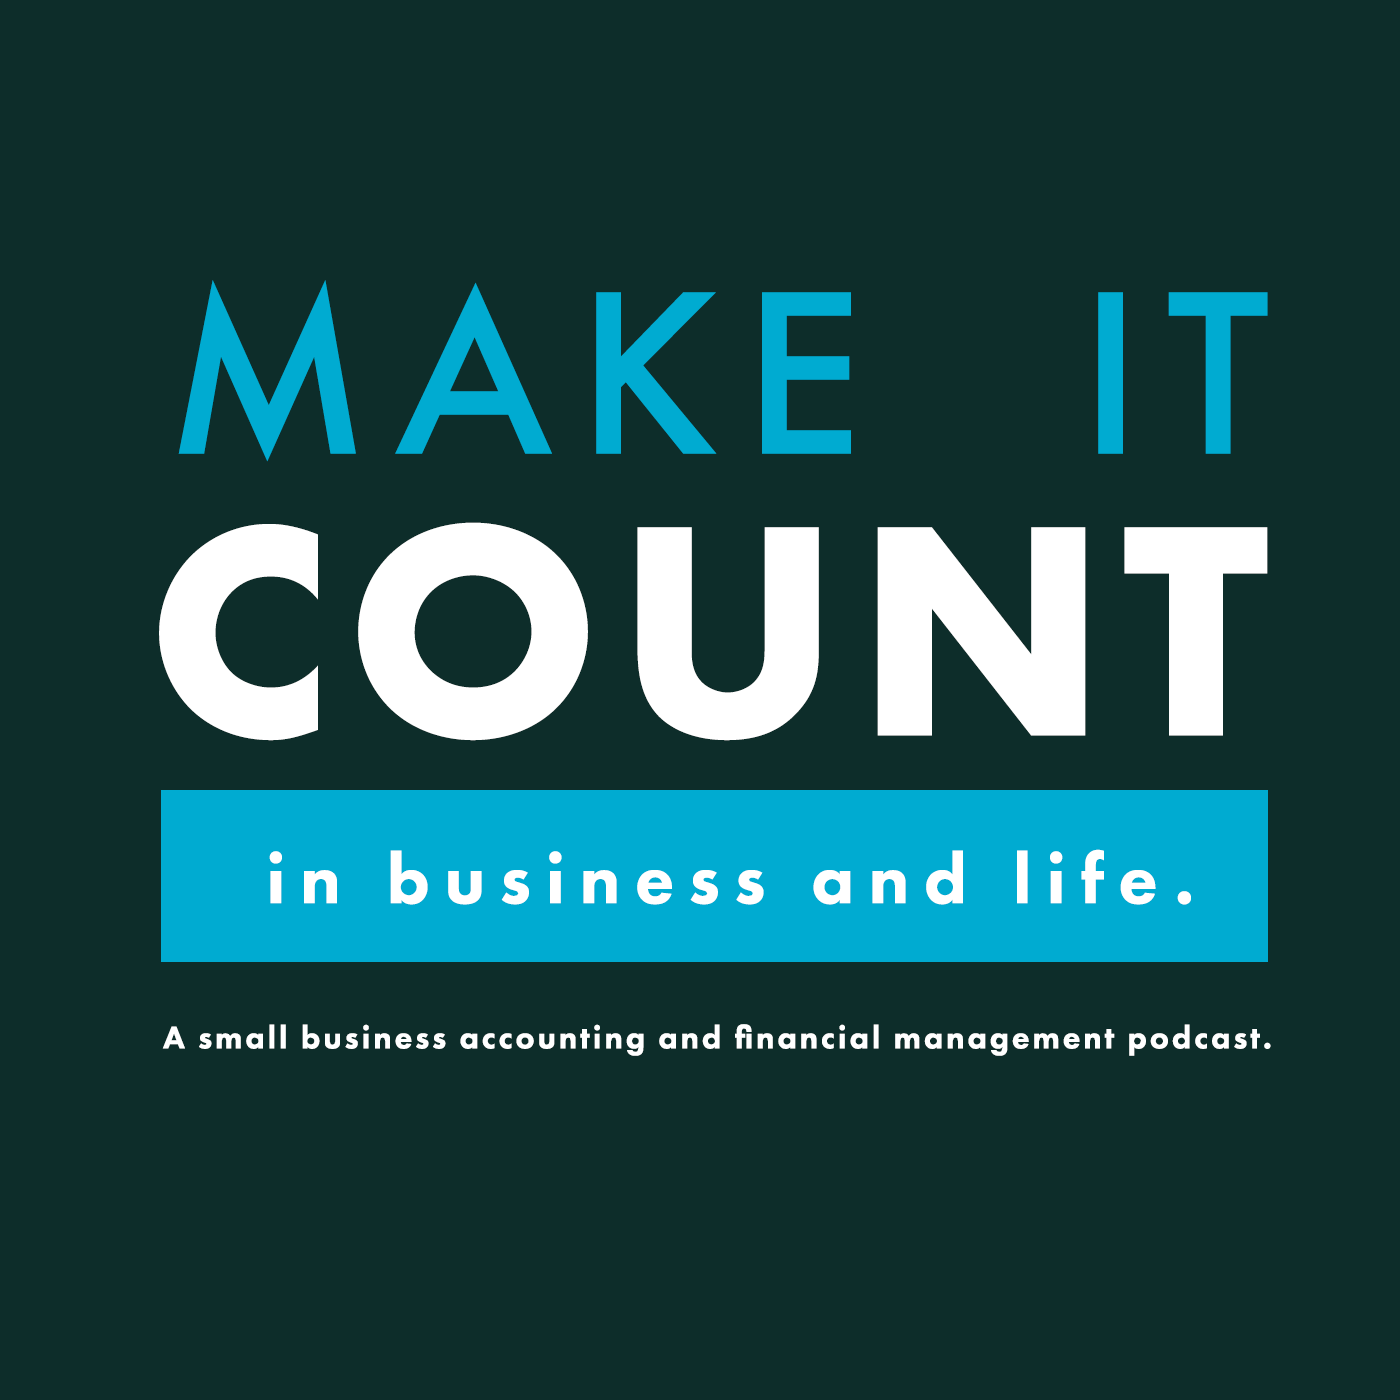 Make it count logo.